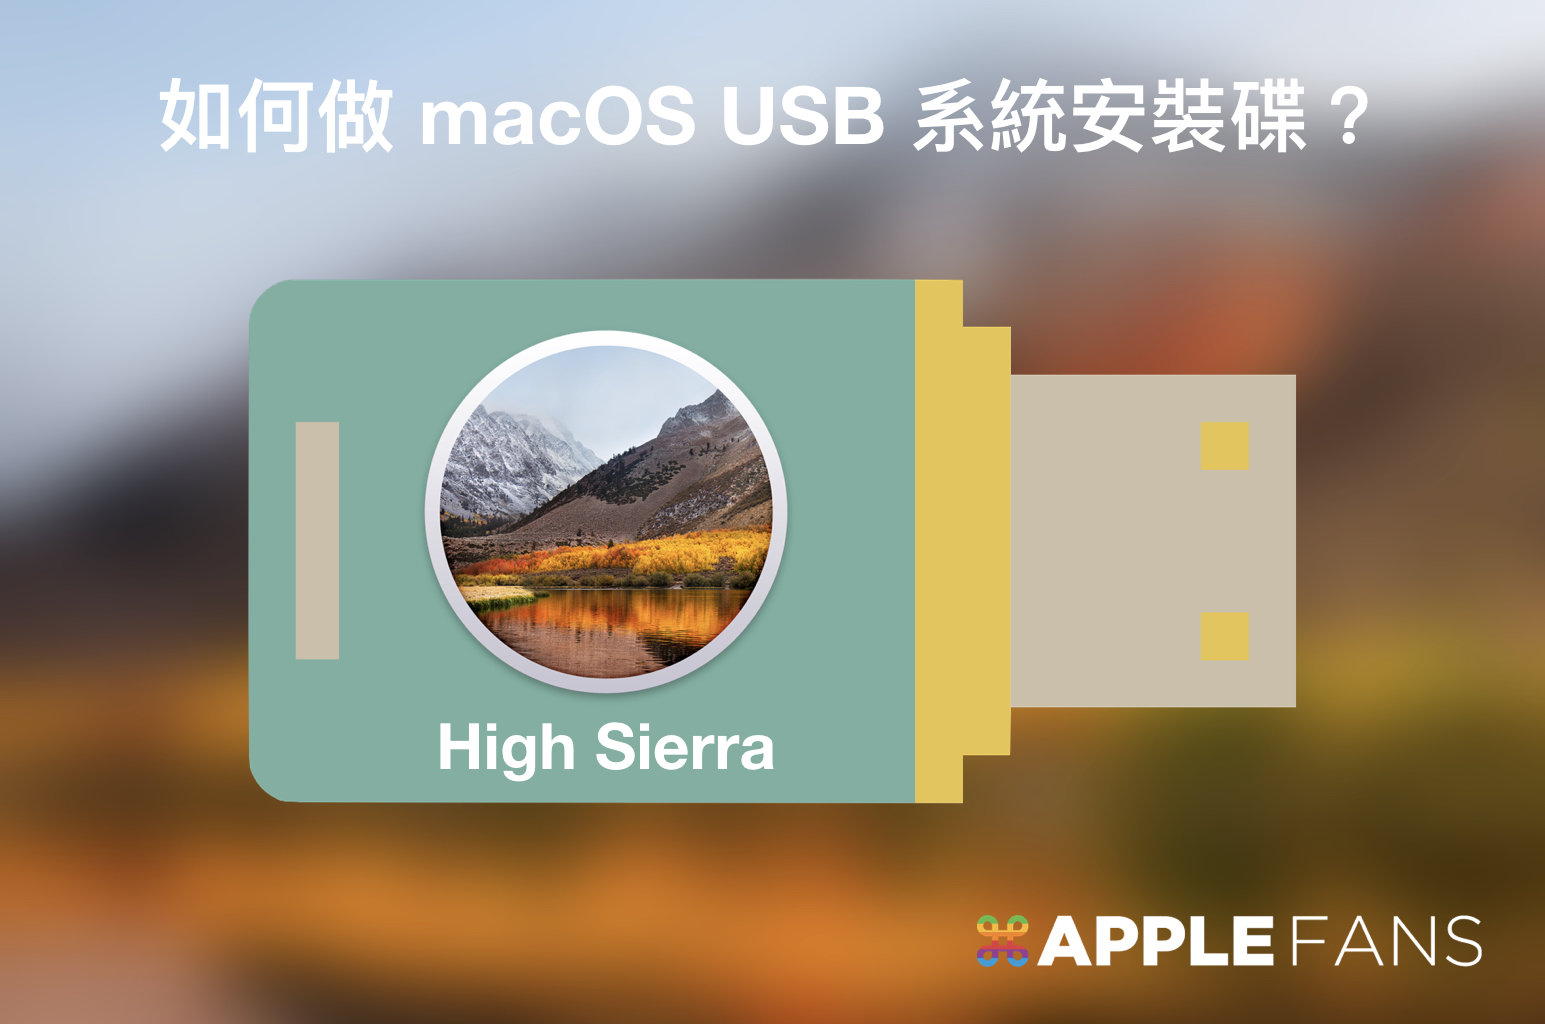 High Sierra USB